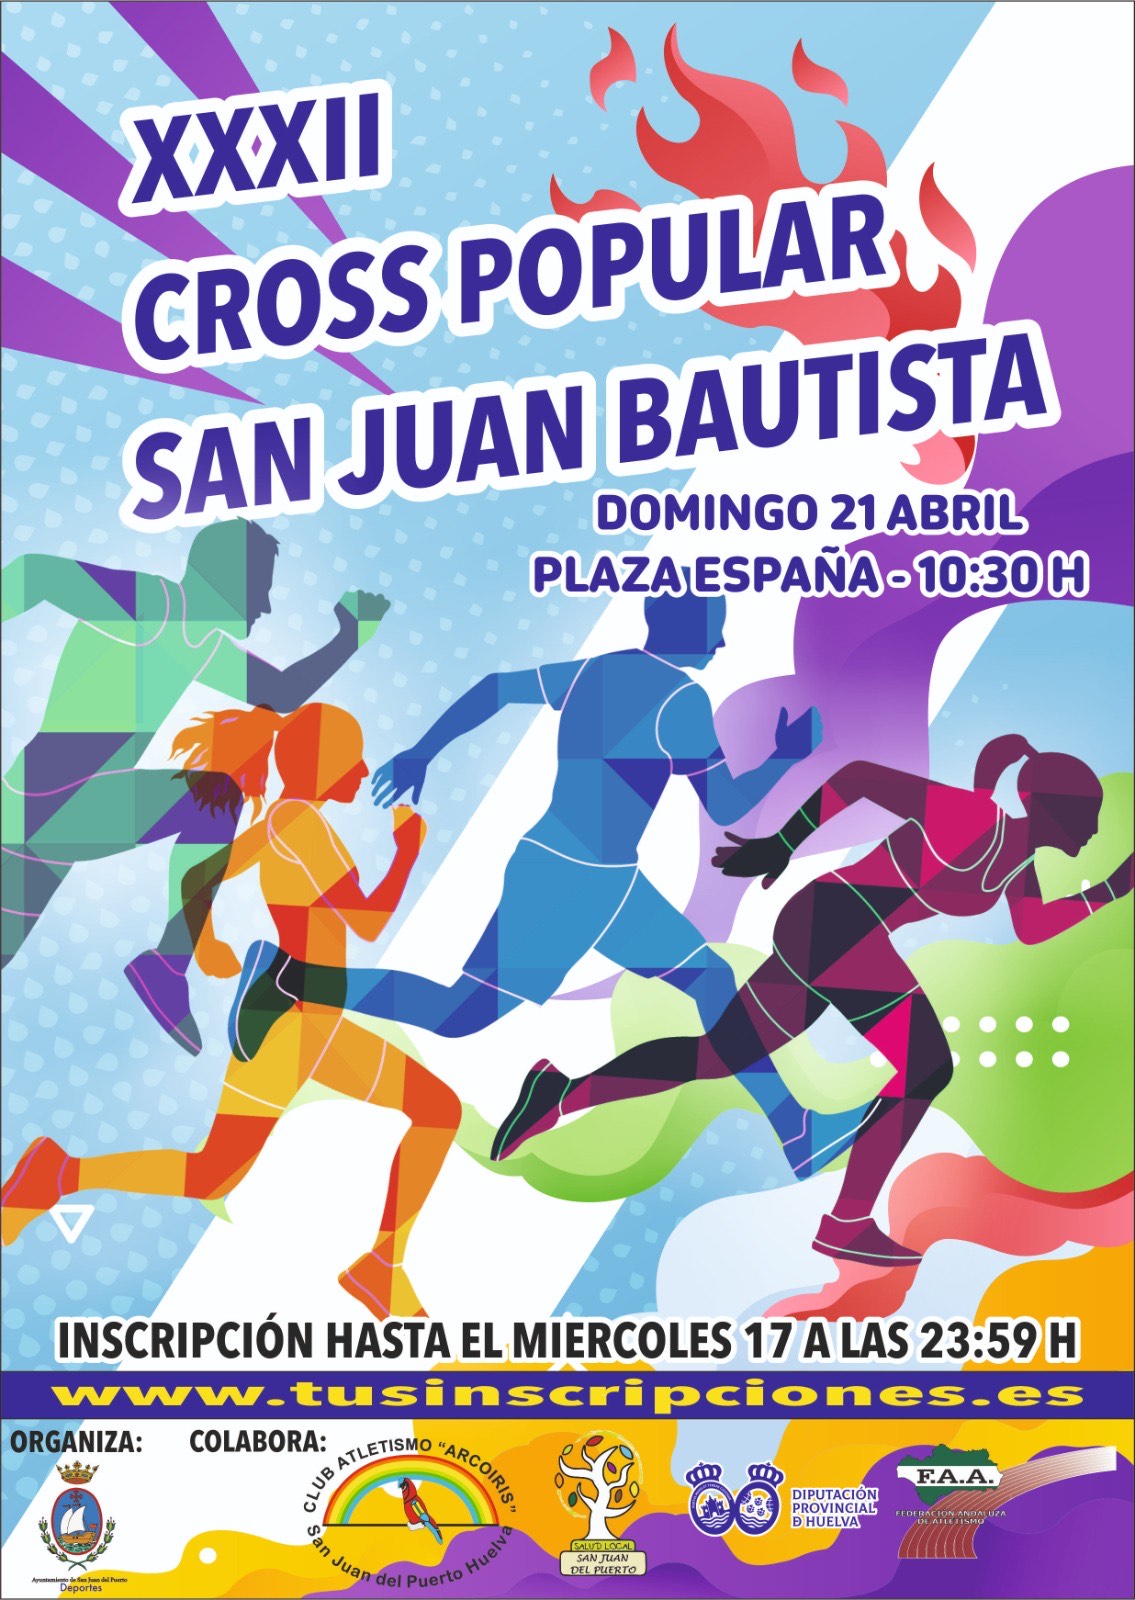 XXXII Cross Popular San Juan Bautista 24